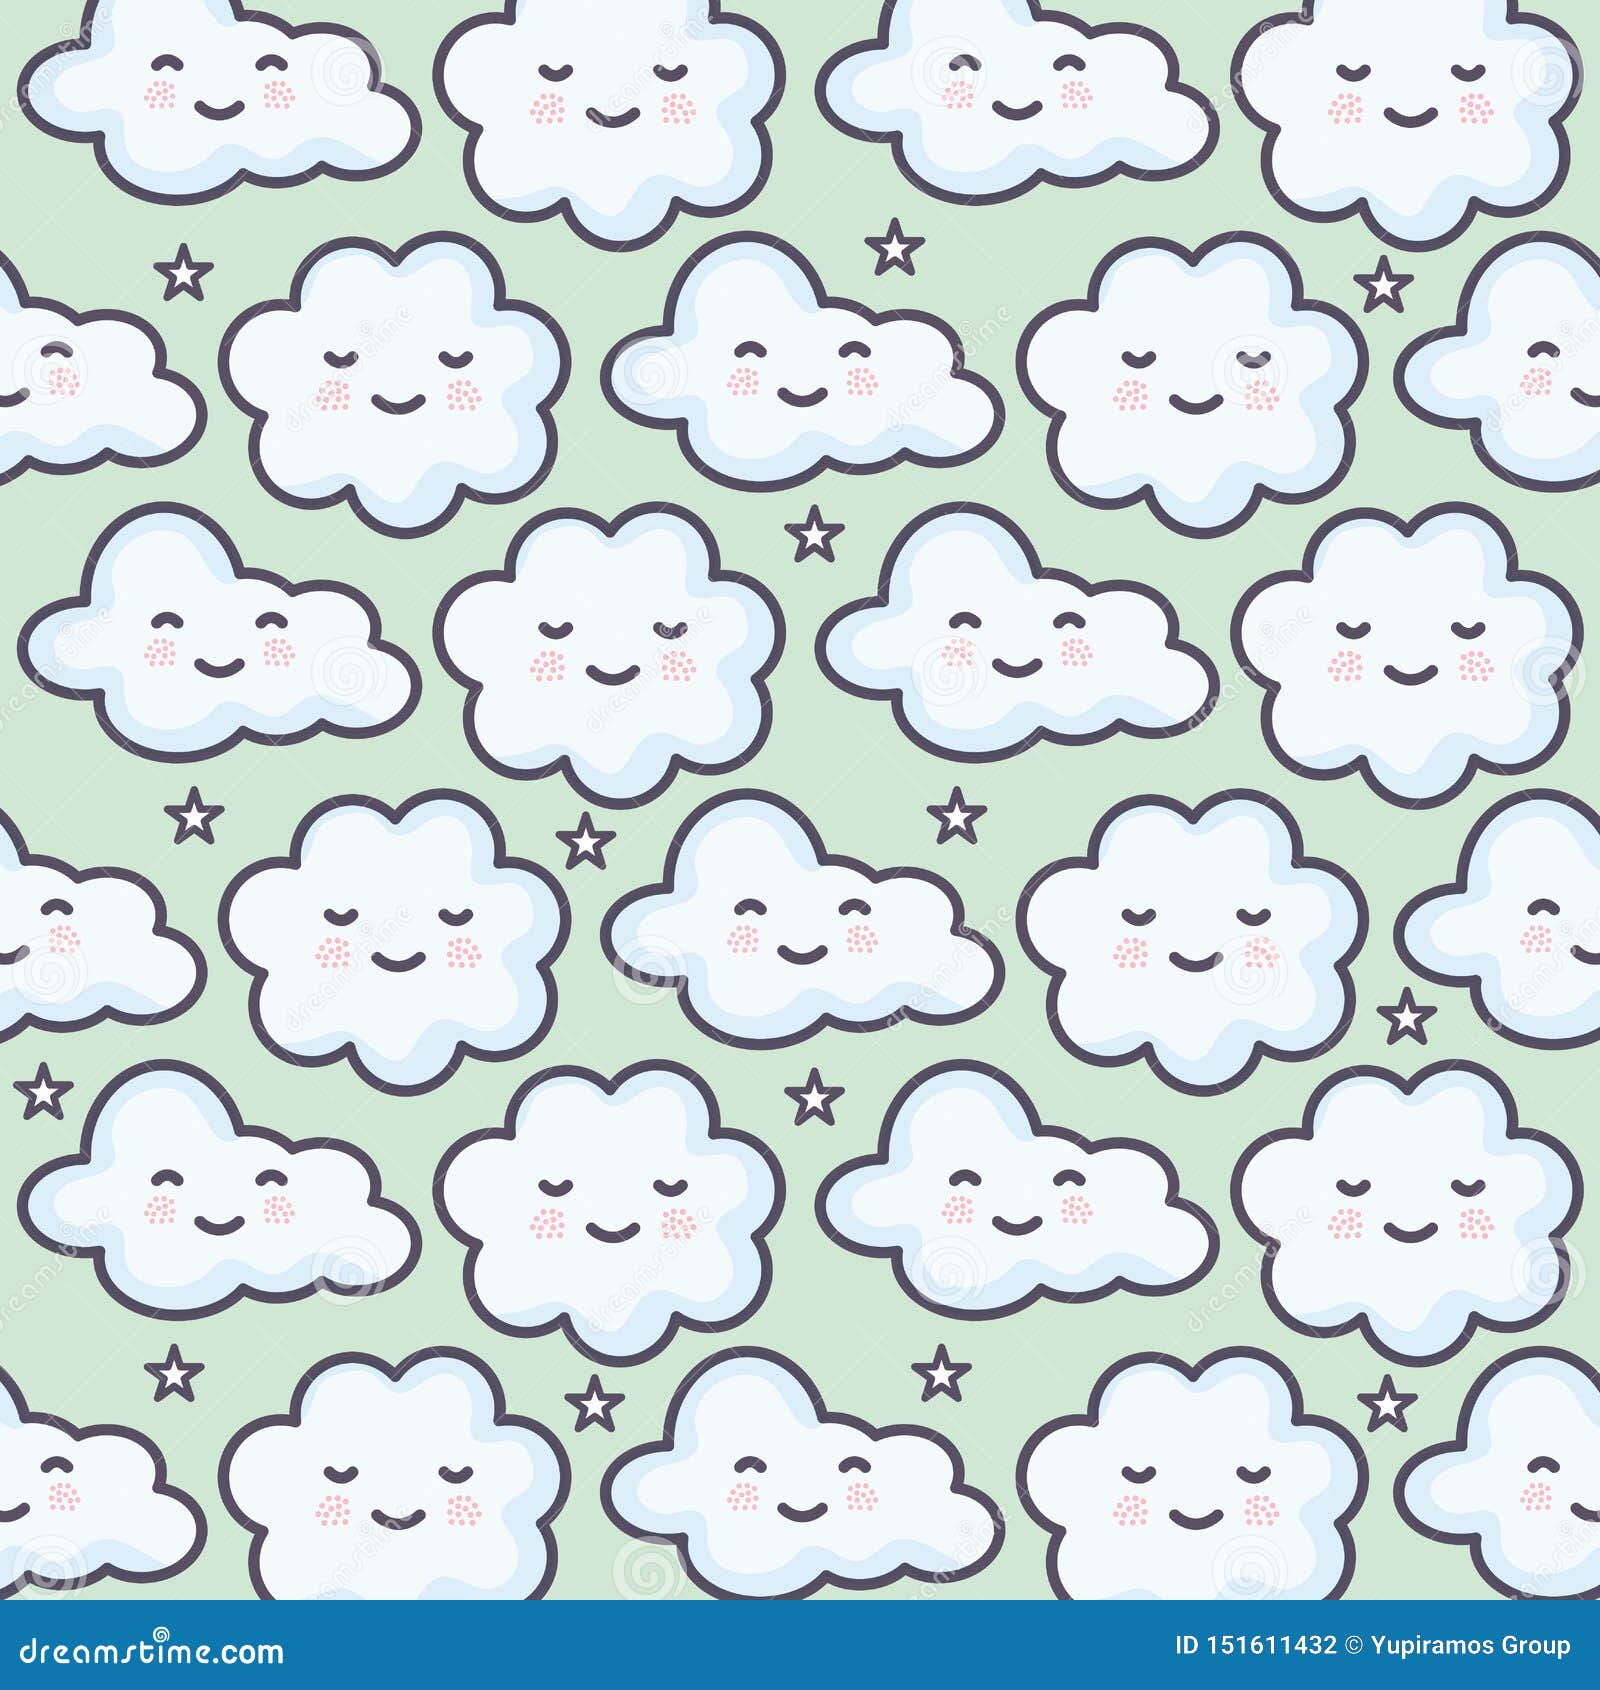 clouds sky weather kawaii characters pattern